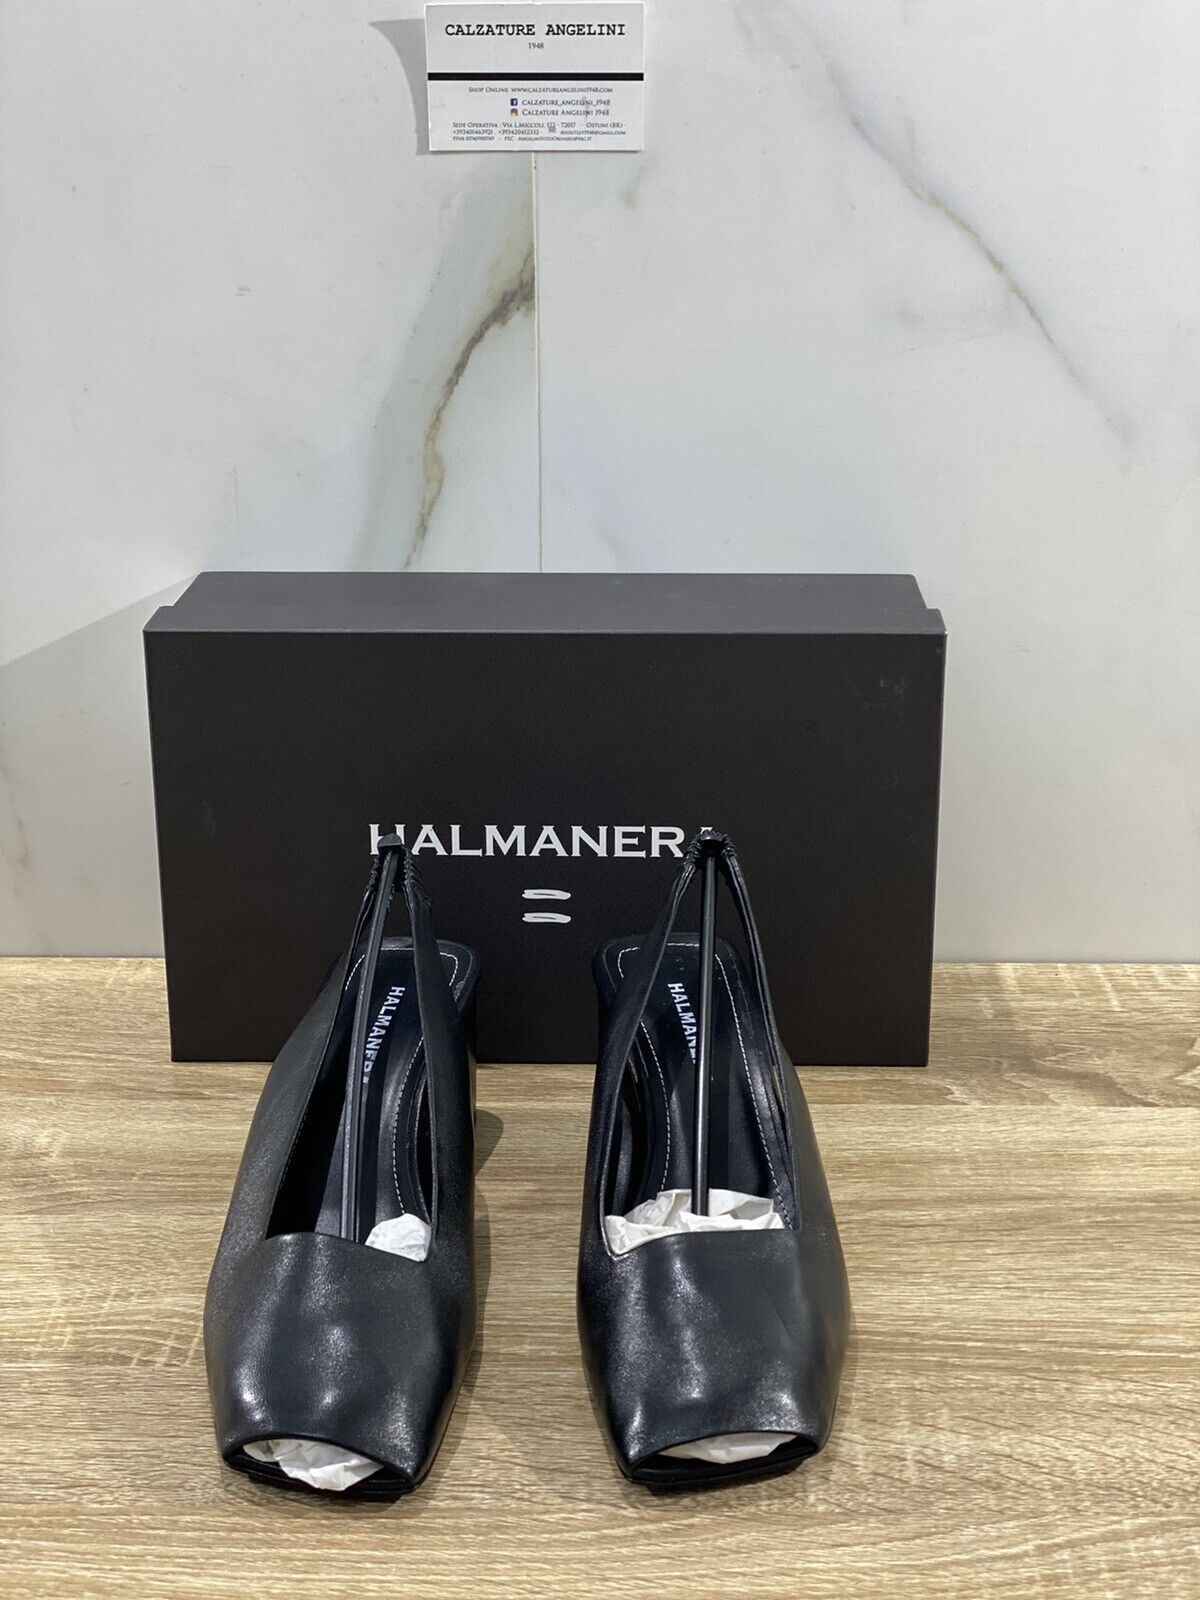 Halmanera Sandalo   donna Irma 32  pelle Nera     luxury shoes 41